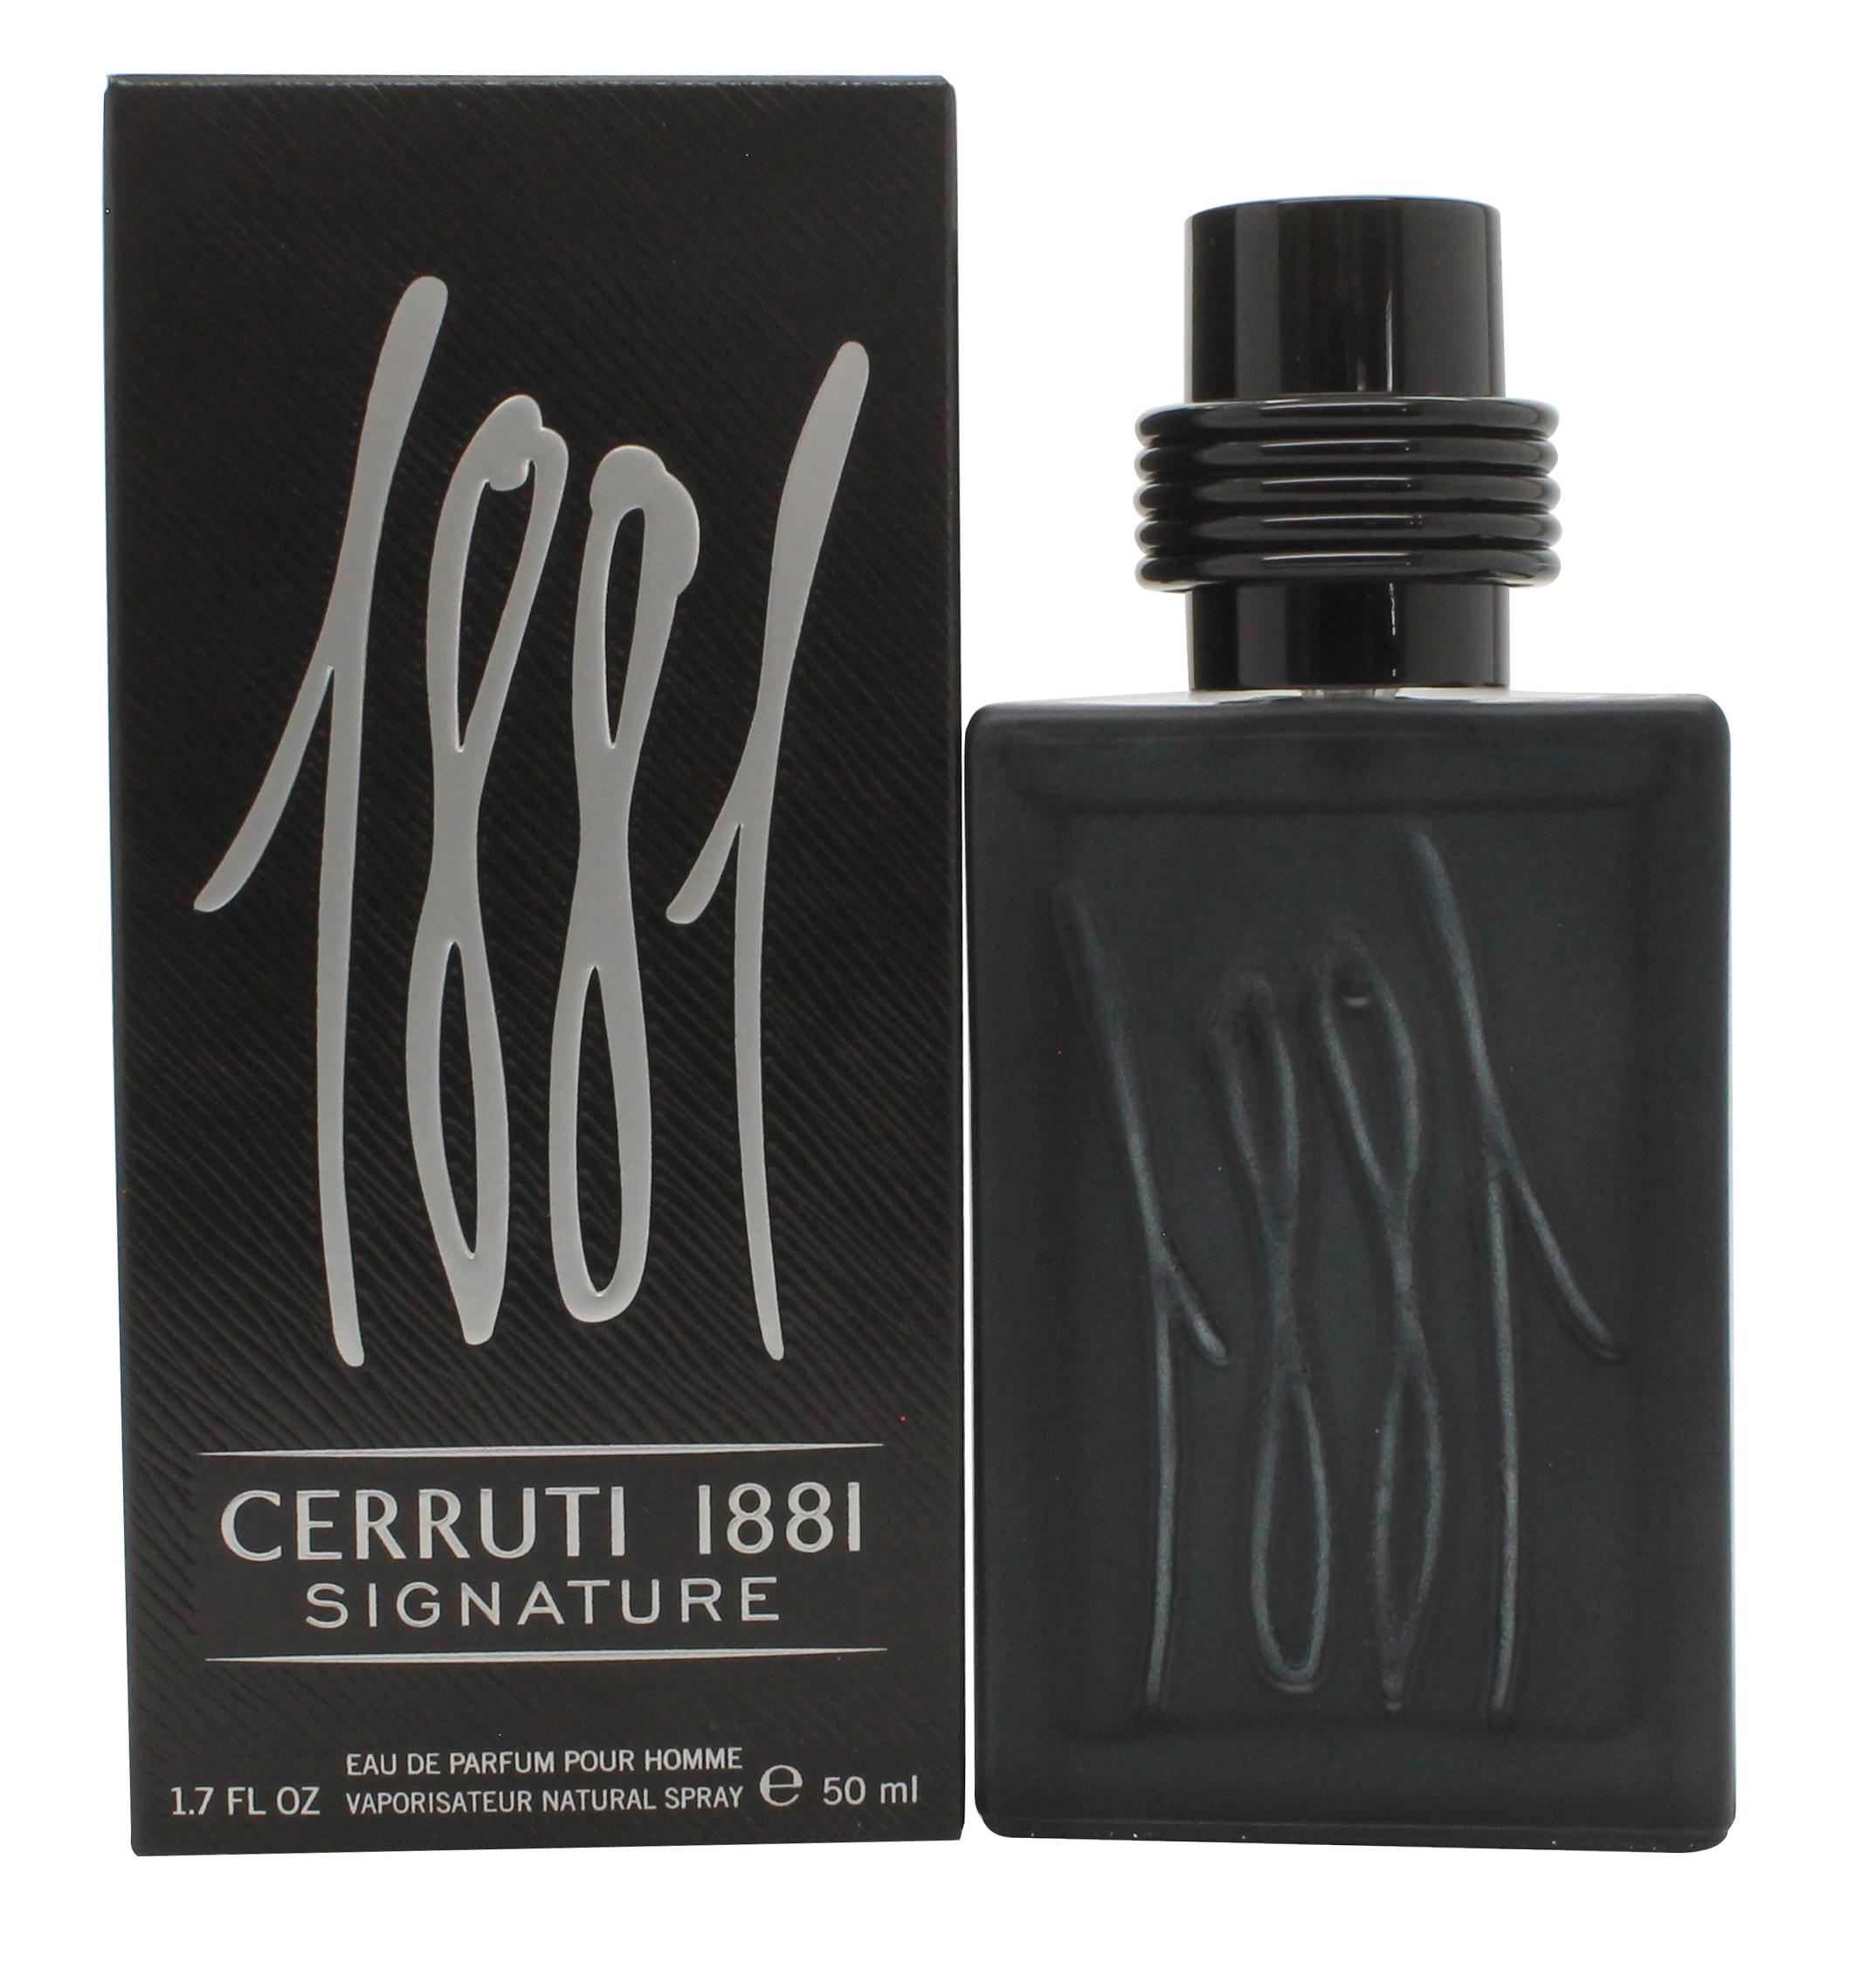 Cerruti 1881 Signature Eau de Parfum 50ml Spray